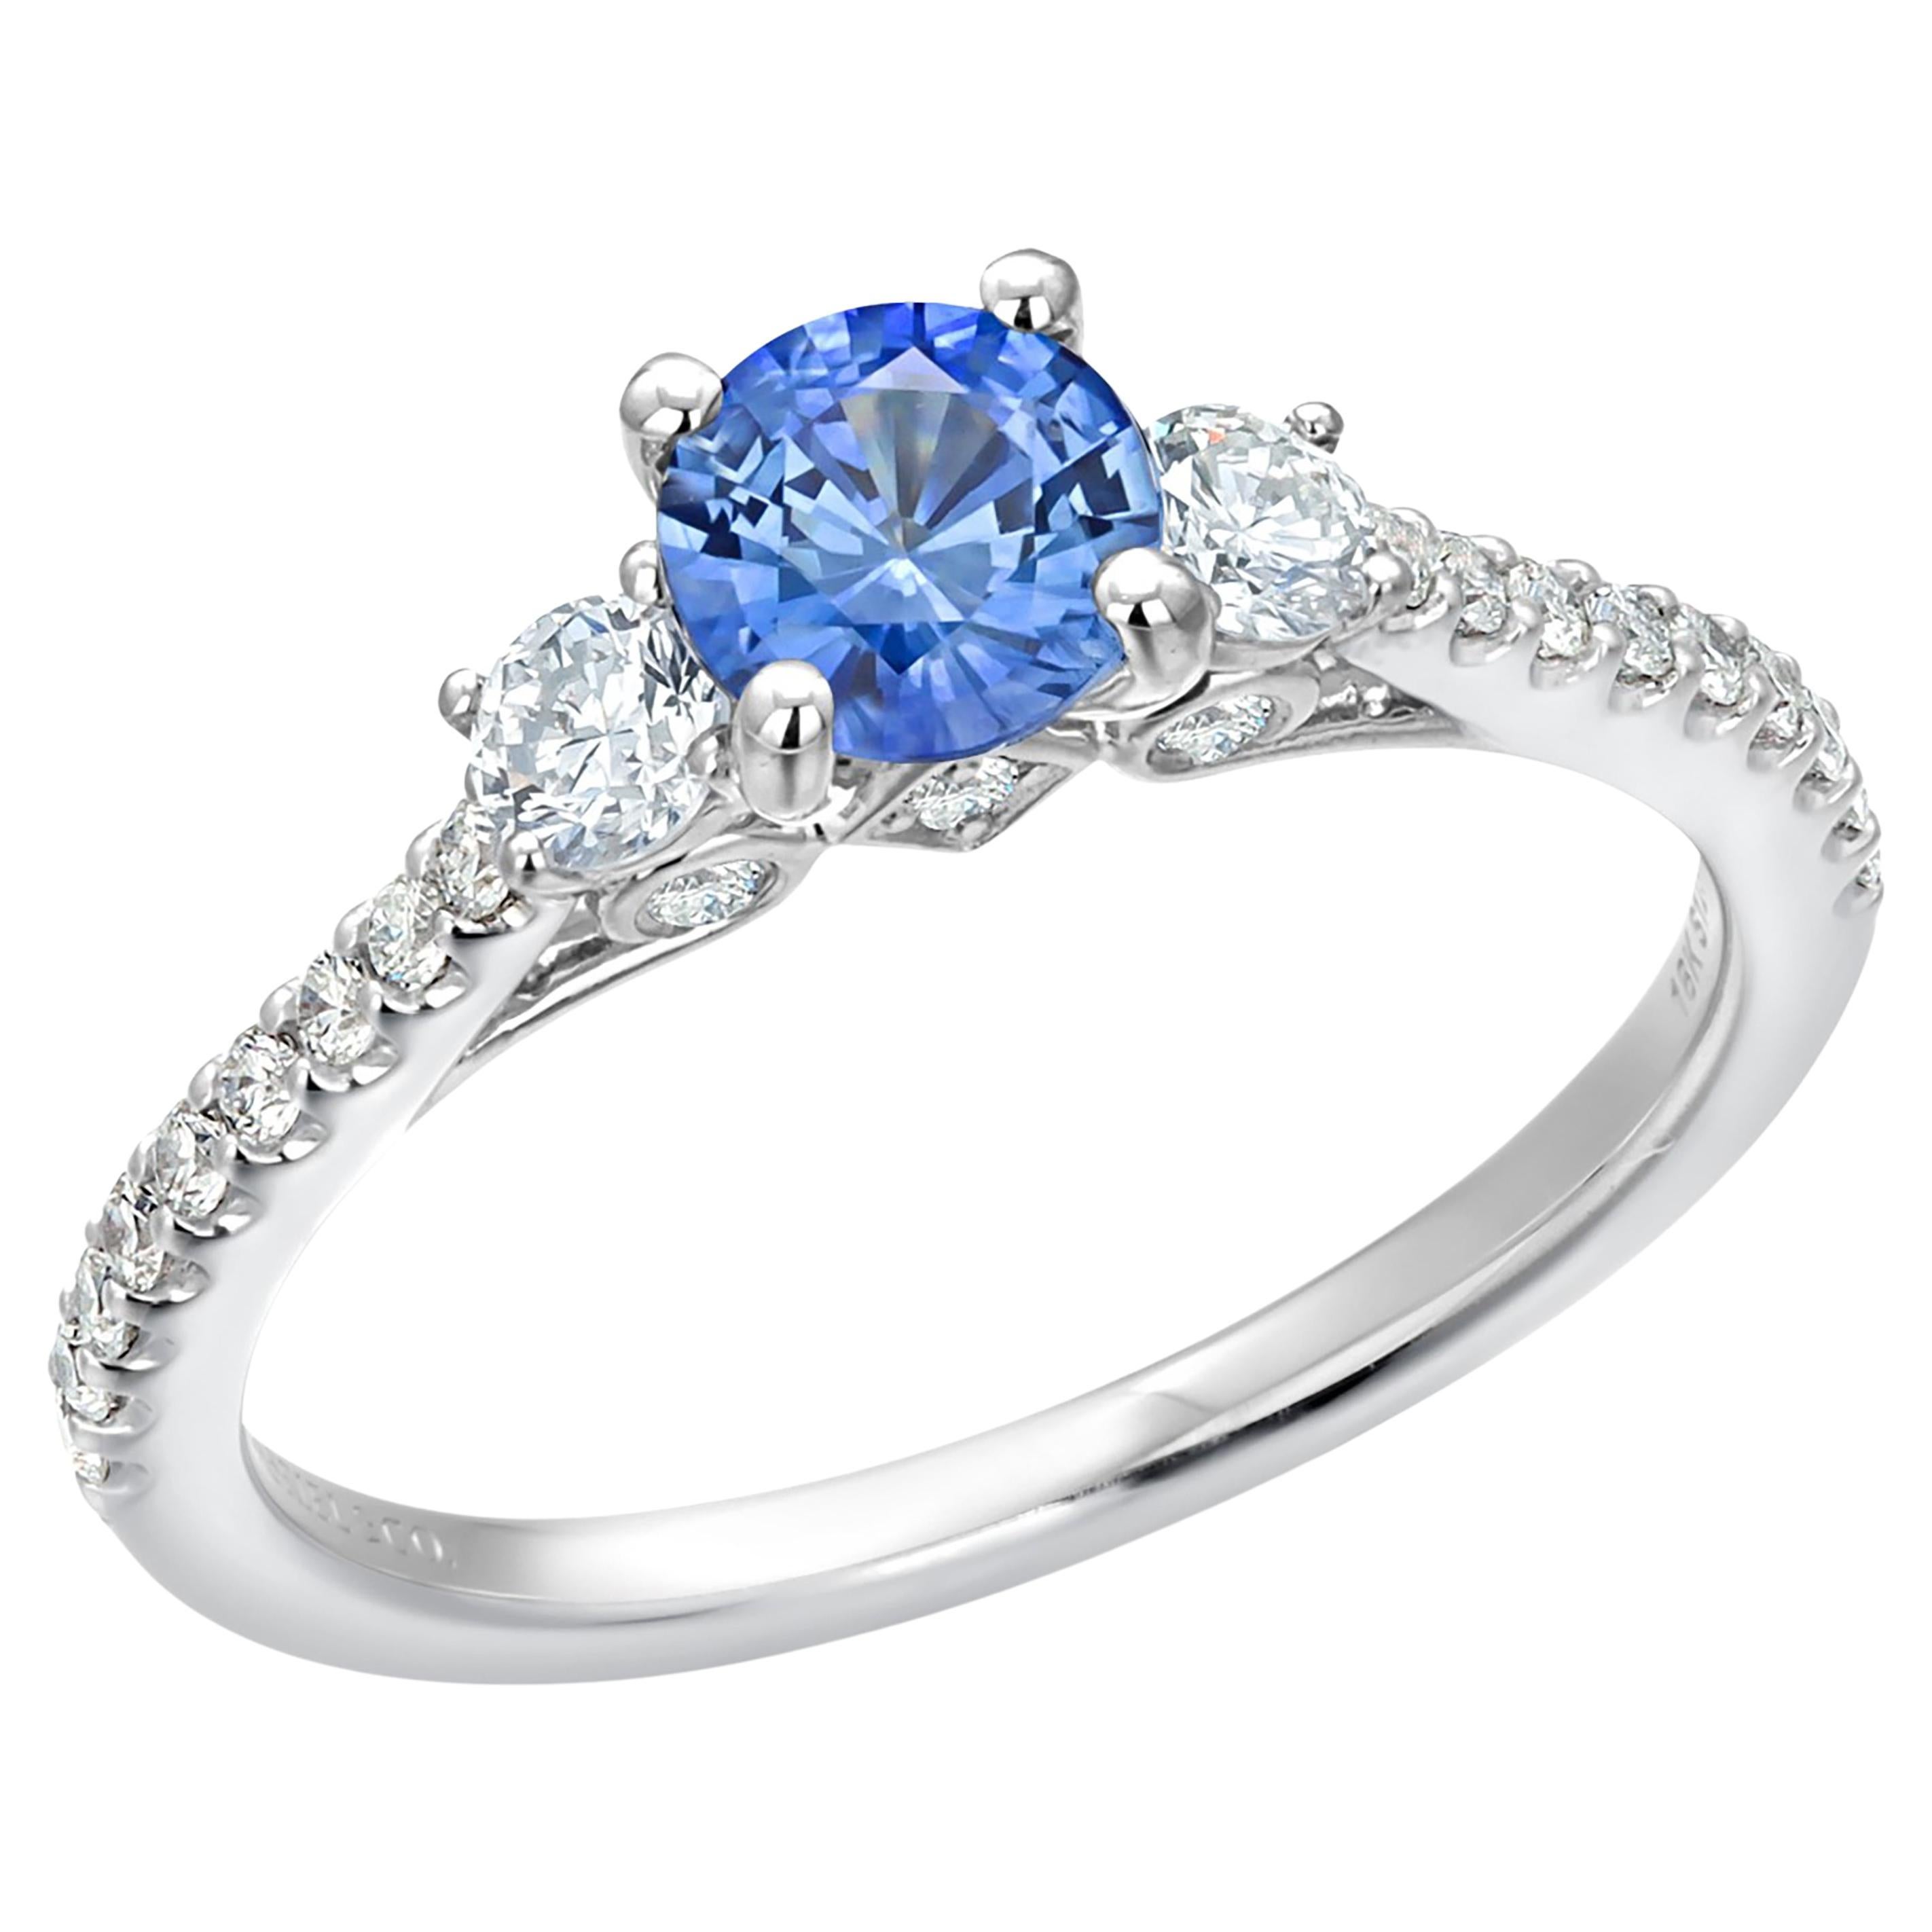  18 Karat White Gold Diamond and Ceylon Sapphire 1.53 Carat Engagement Ring For Sale